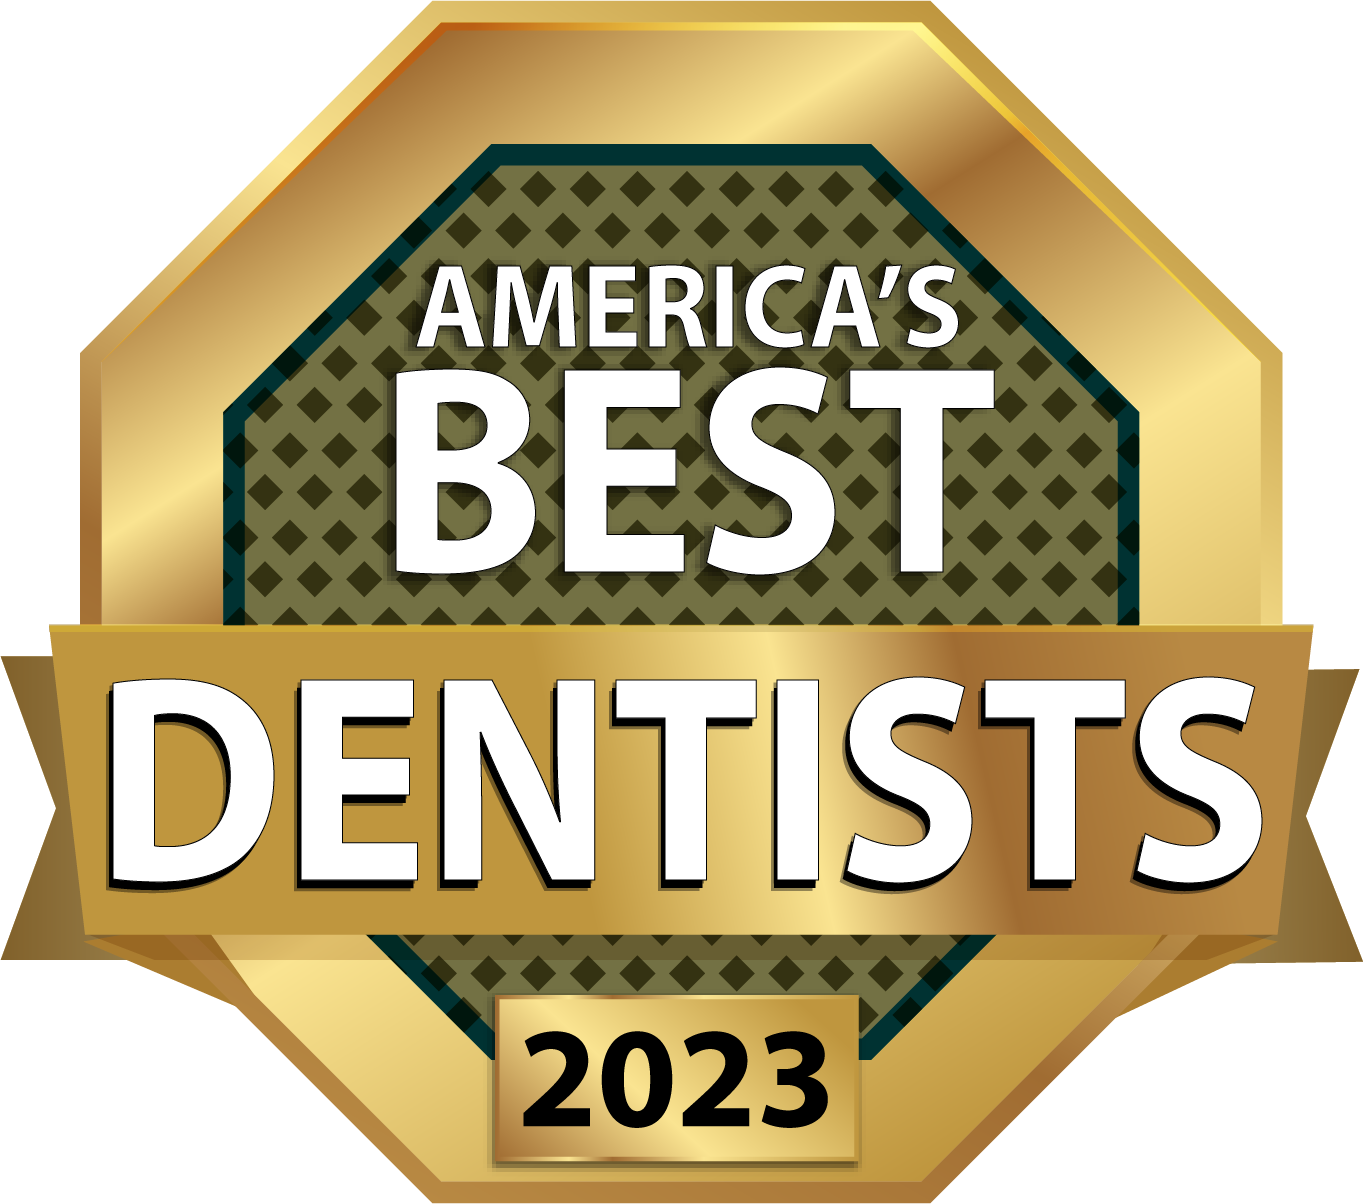 America's Best Dentists 2023 Dentist OCTAGONAL